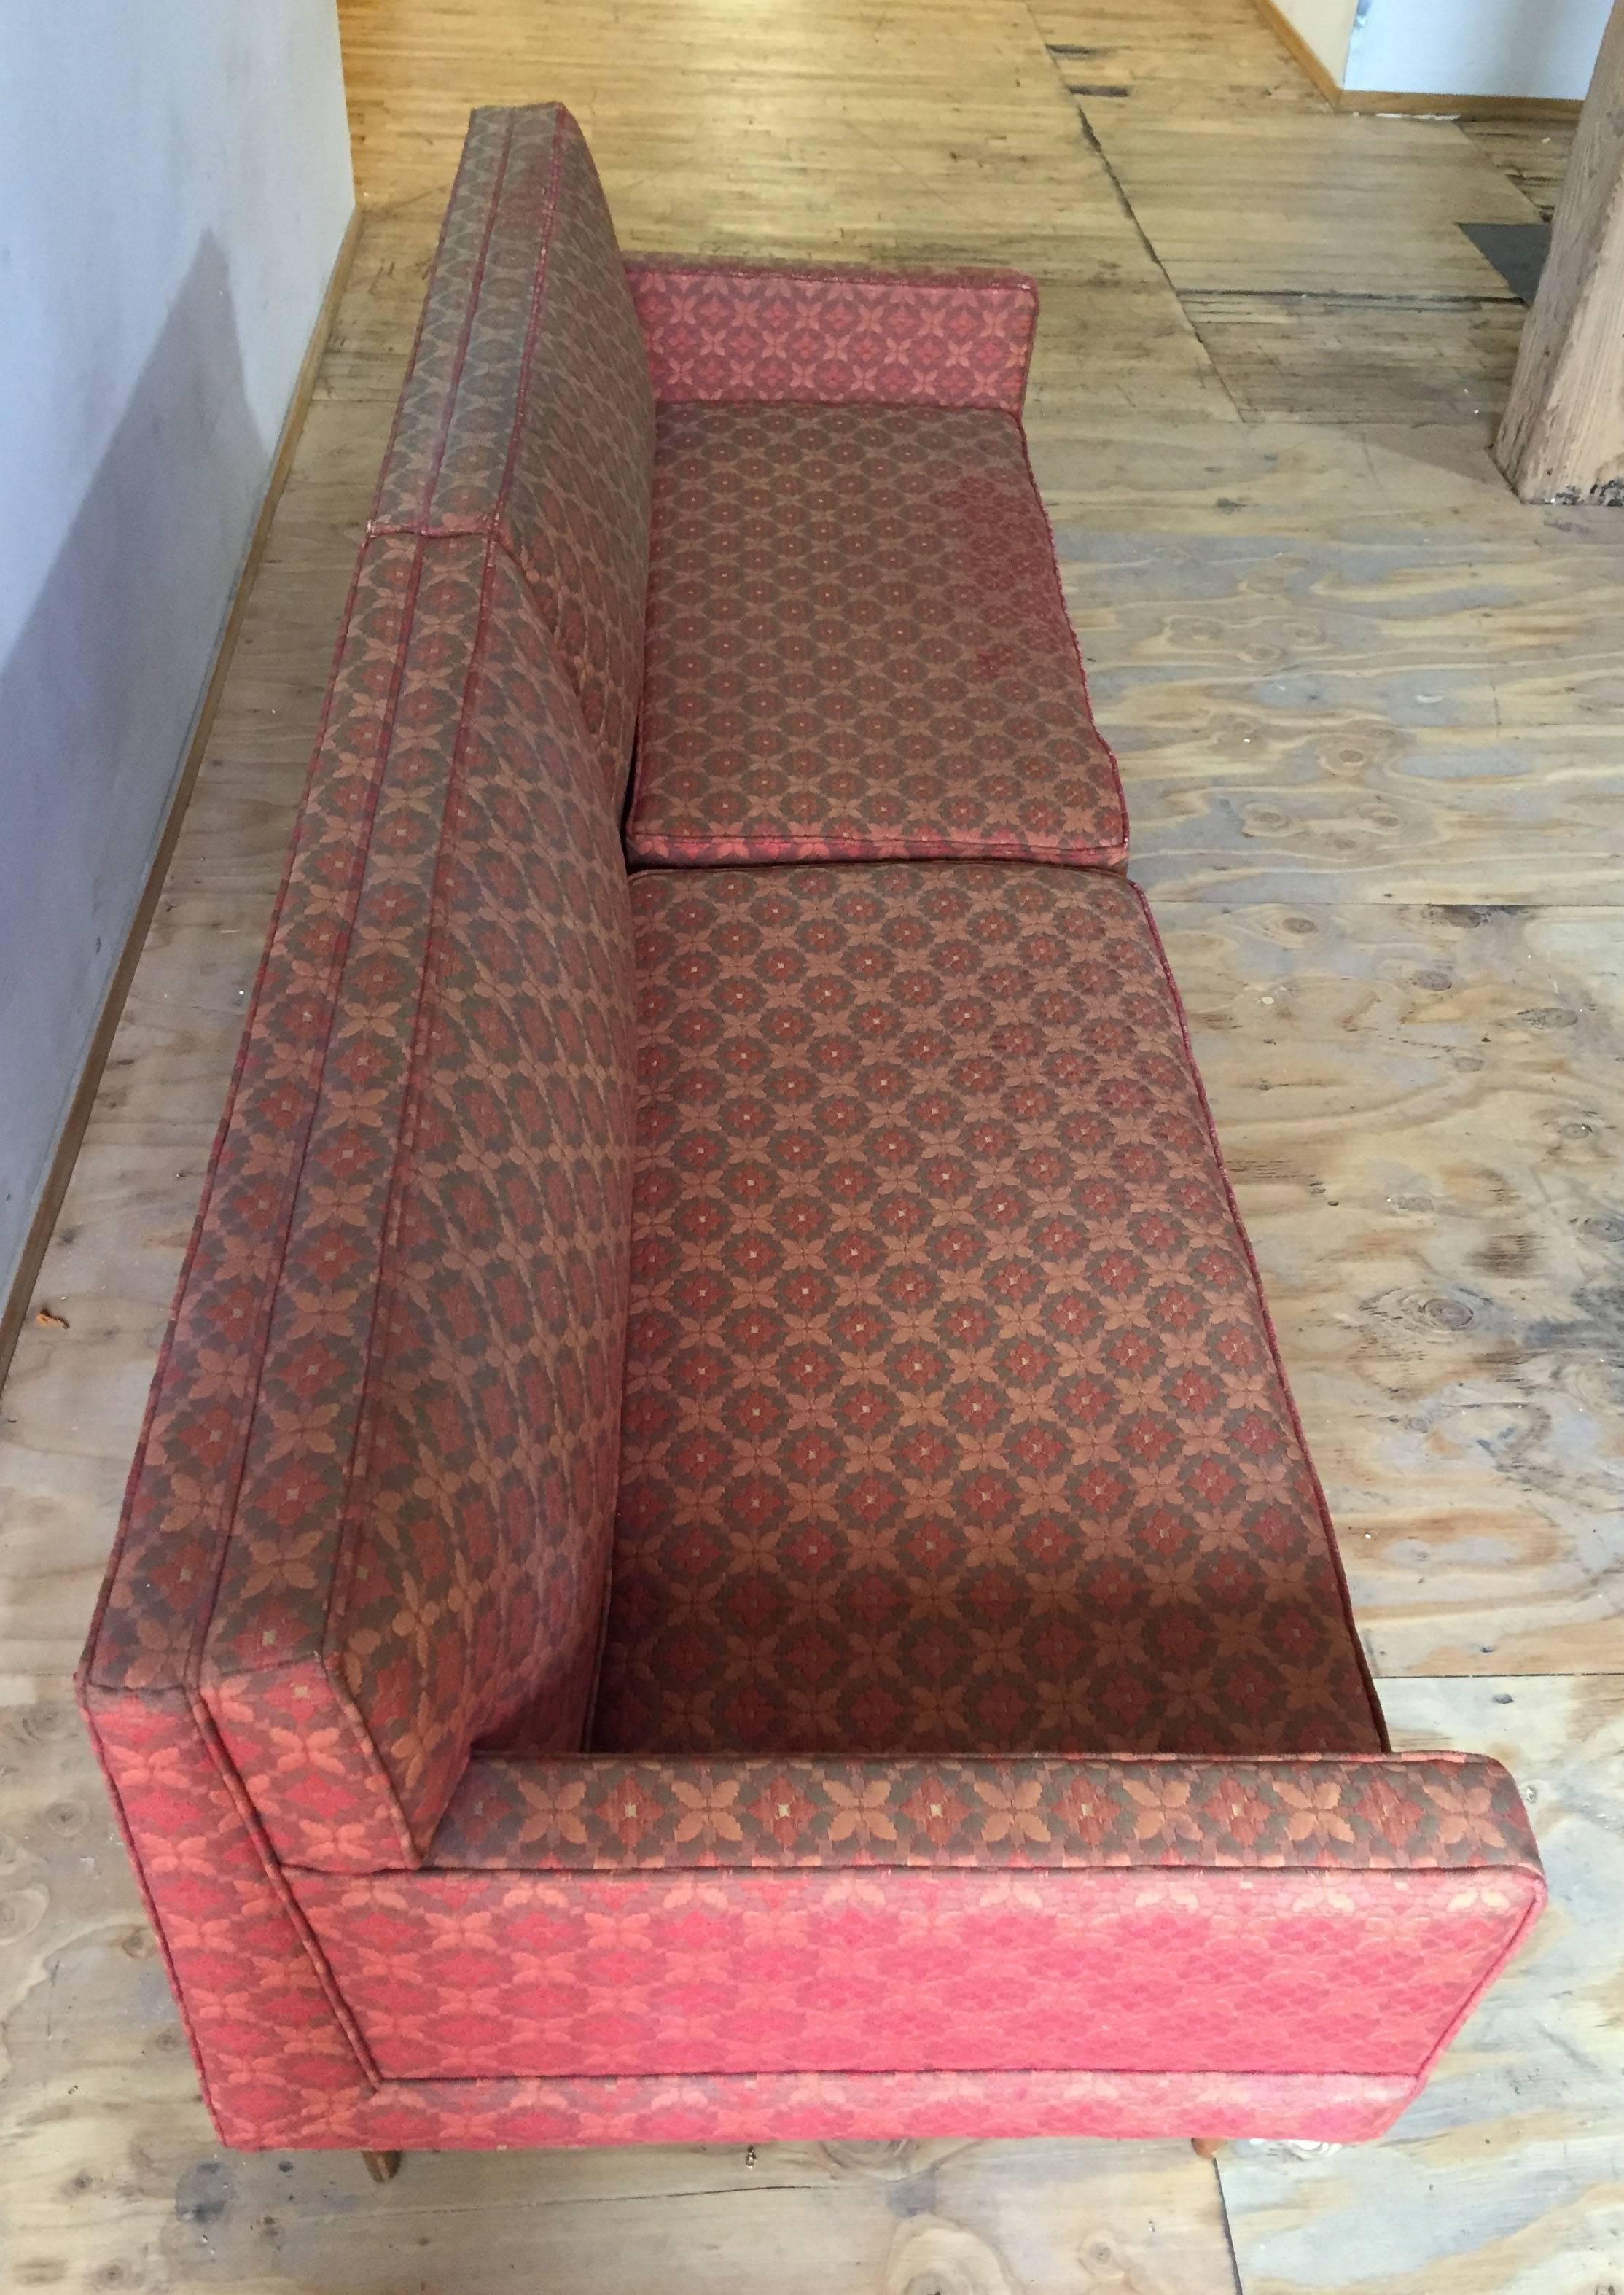 vintage mid century sectional sofa